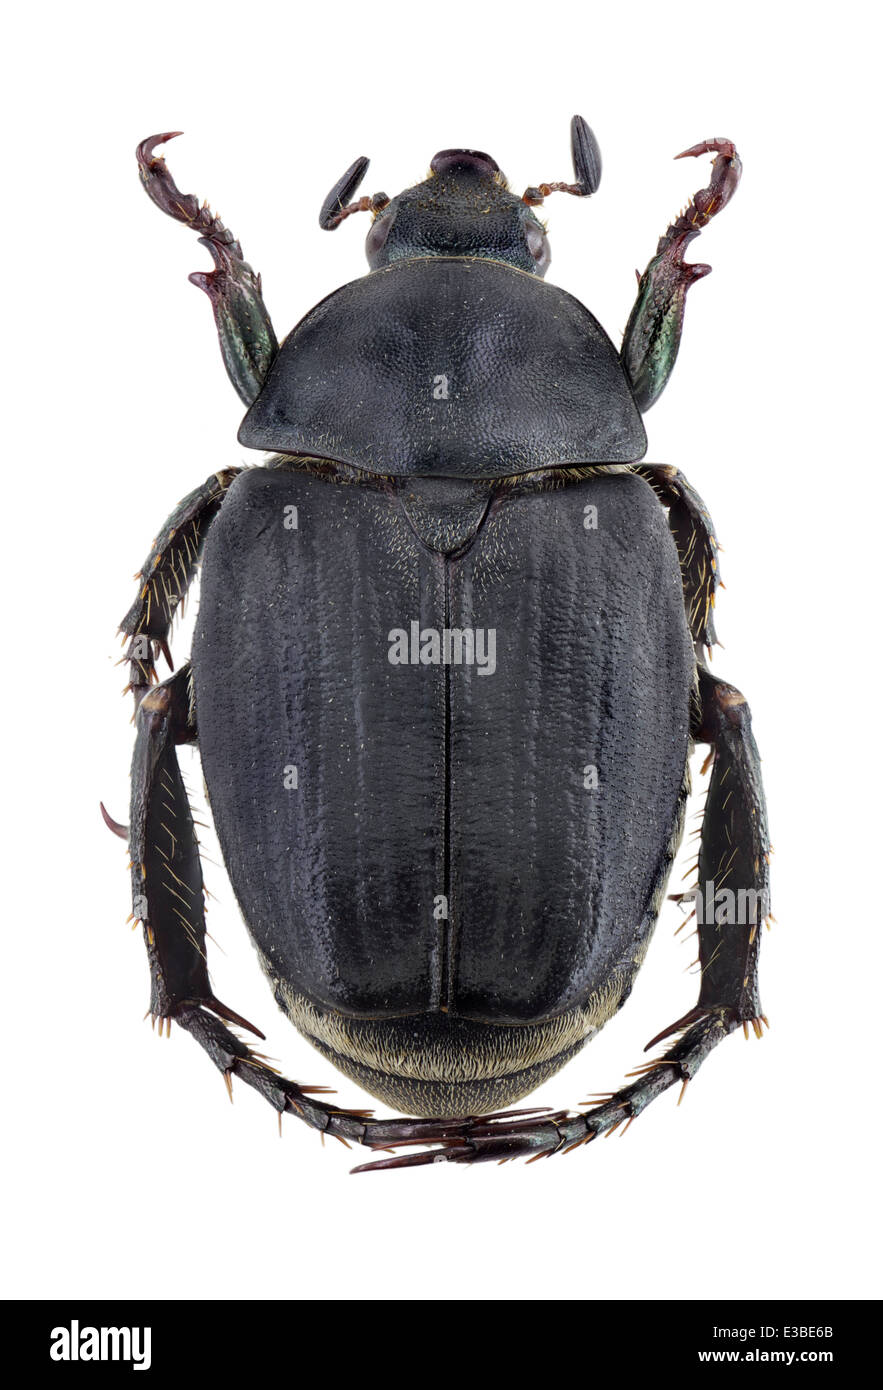 Coleoptera; Rutelidae; Anisoplia thessalica; Reitter 1889; L: 15mm Stock Photo